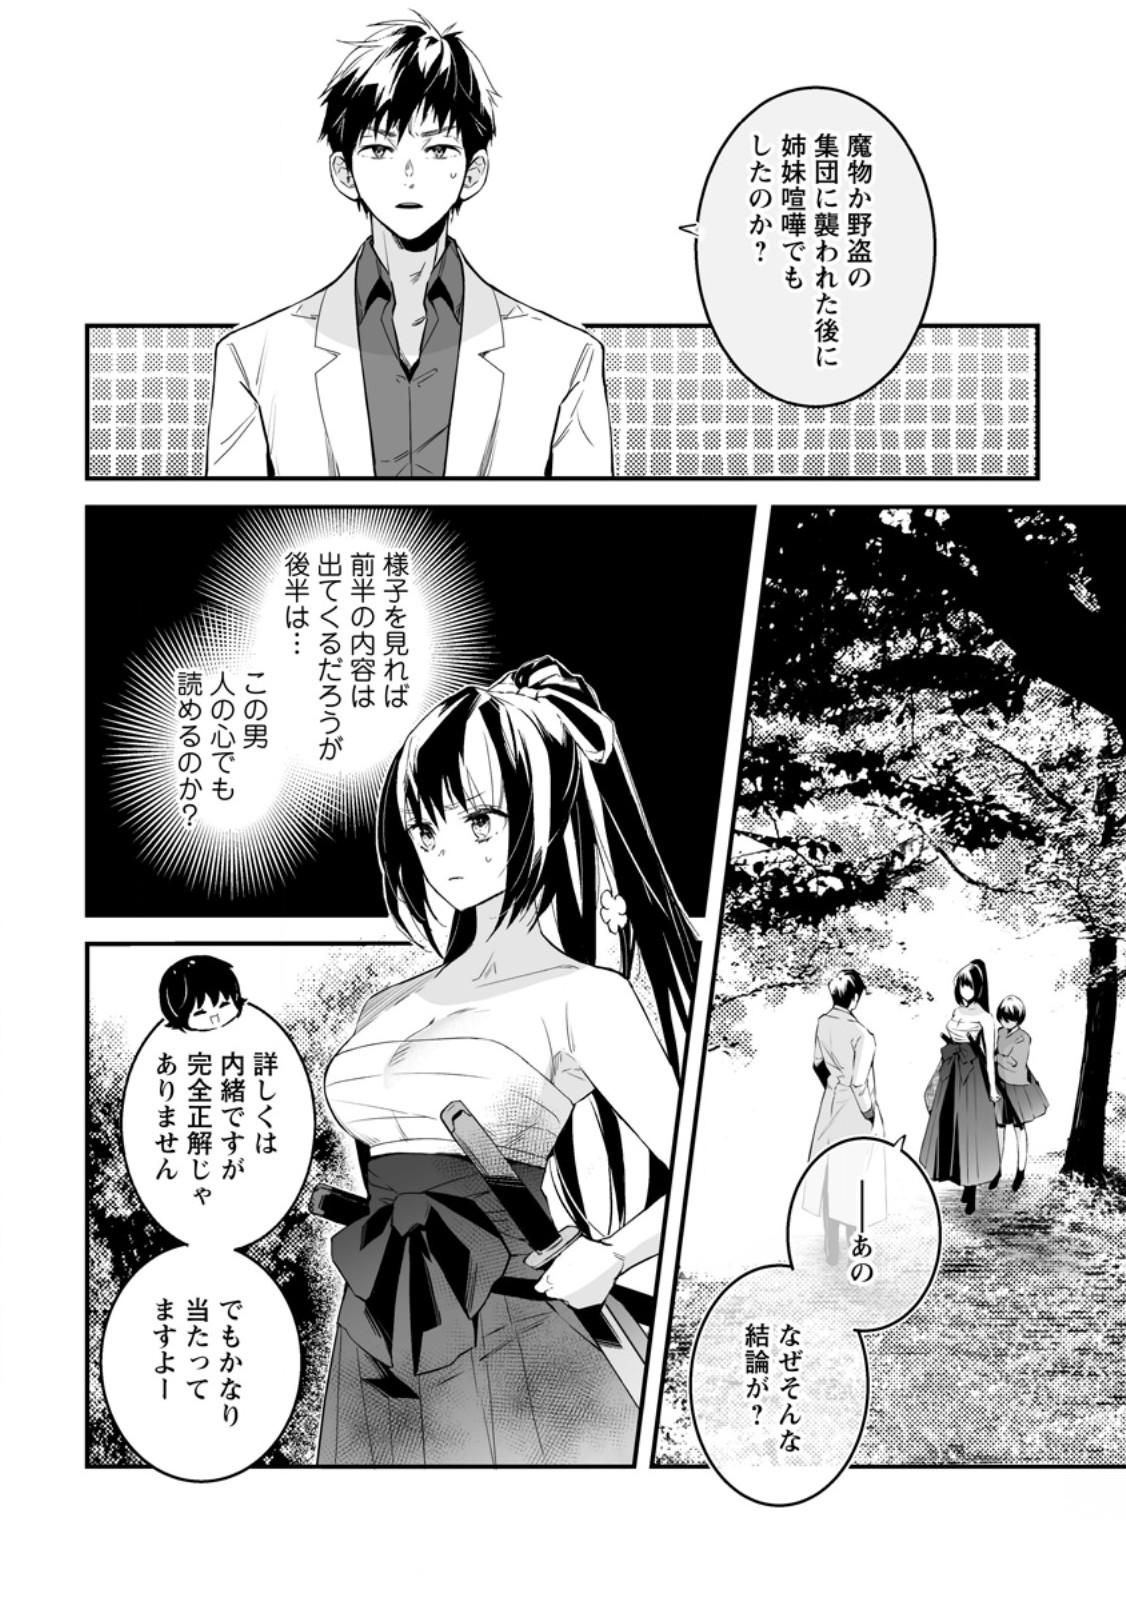 Hakui no Eiyuu - Chapter 32.3 - Page 3